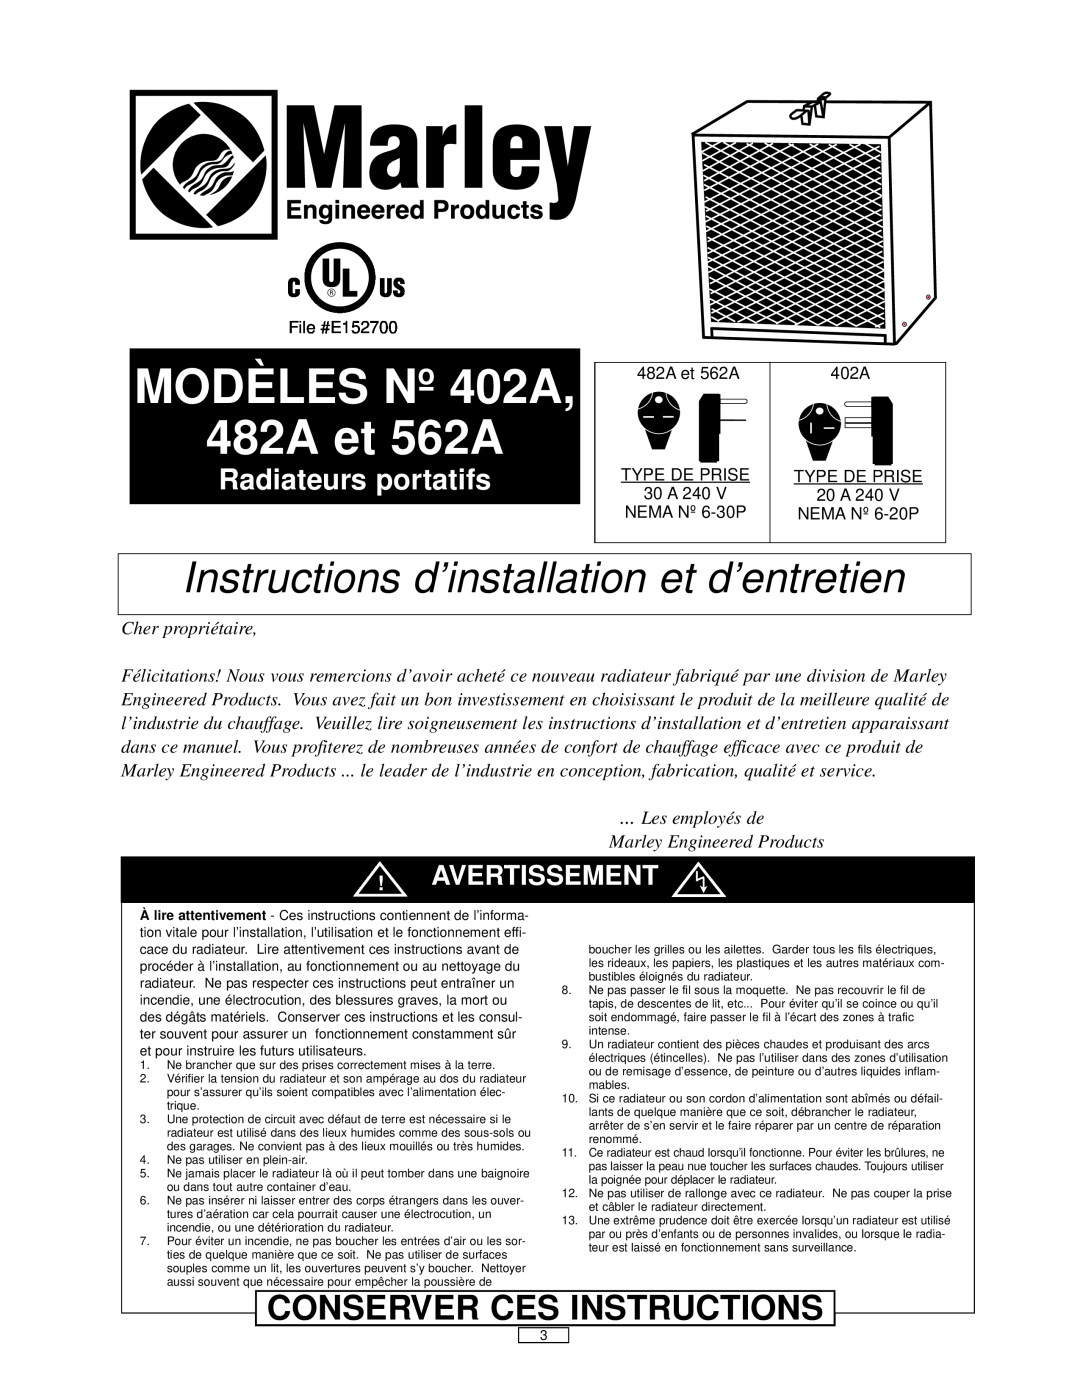 Marley Engineered Products MODÈLES Nº 402A, 482A et 562A, Conserver Ces Instructions, Avertissement, Cher propriétaire 